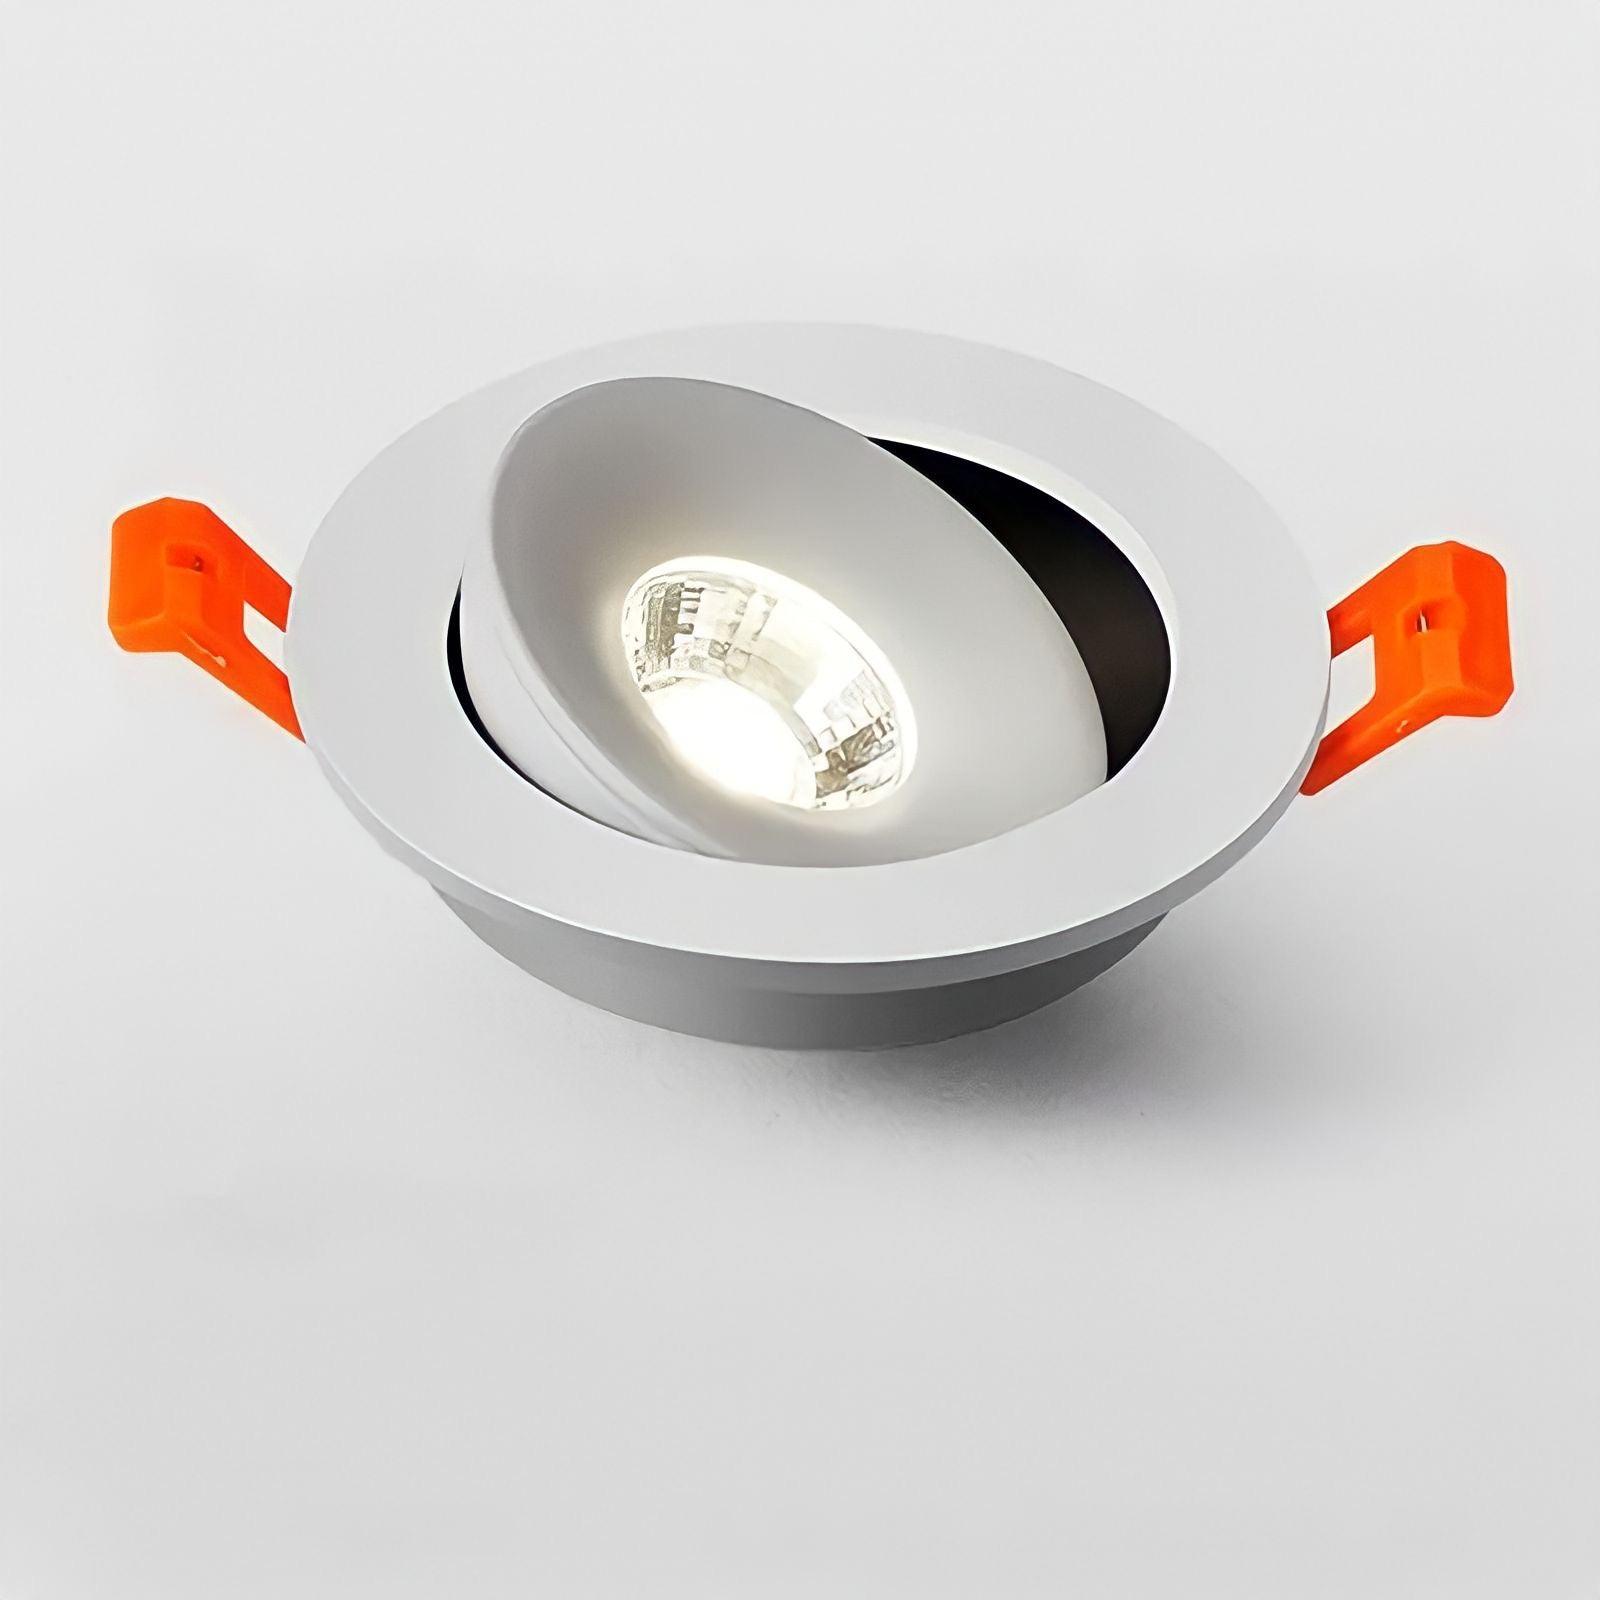 LED Spot Light Modern - BUYnBLUE 